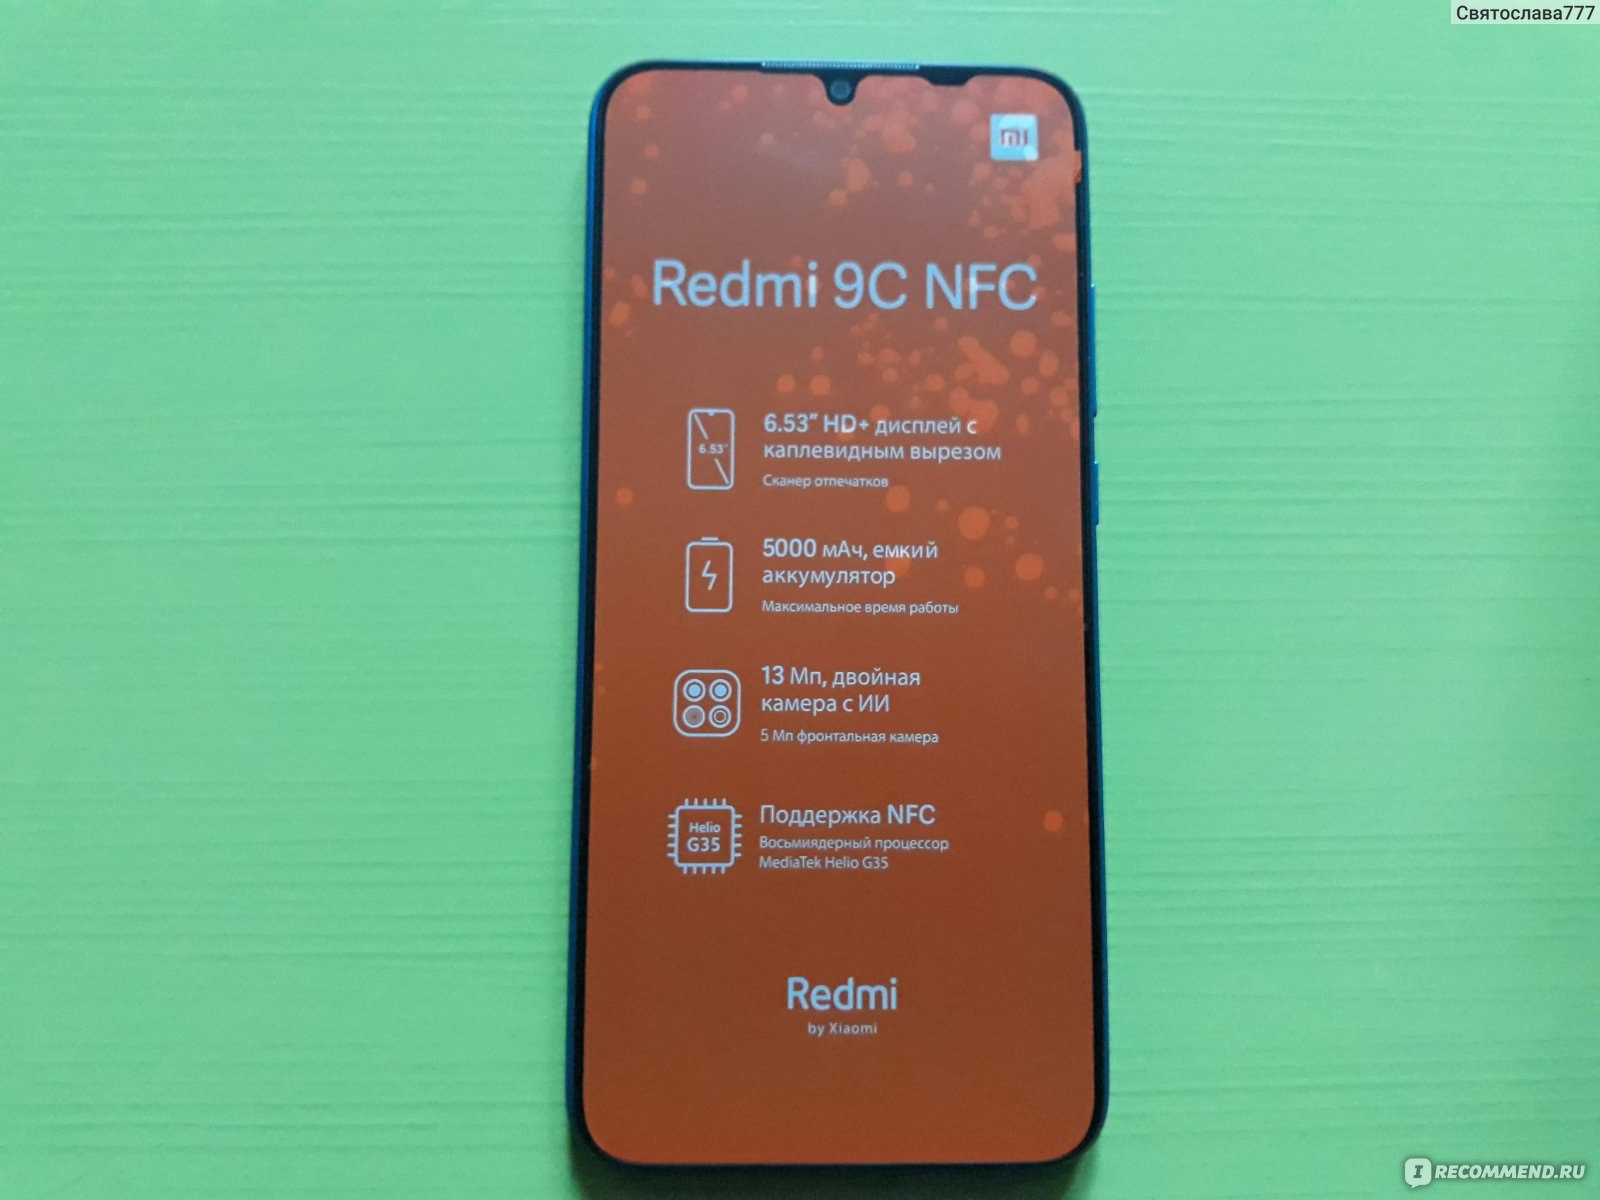 Redmi 9c nfc 3. Телефон Redmi 9c NFC. Xiaomi Redmi 9c NFC 64gb. Redmi 9c NFC 64 ГБ. Xiaomi Redmi 9c NFC 4/64 ГБ.